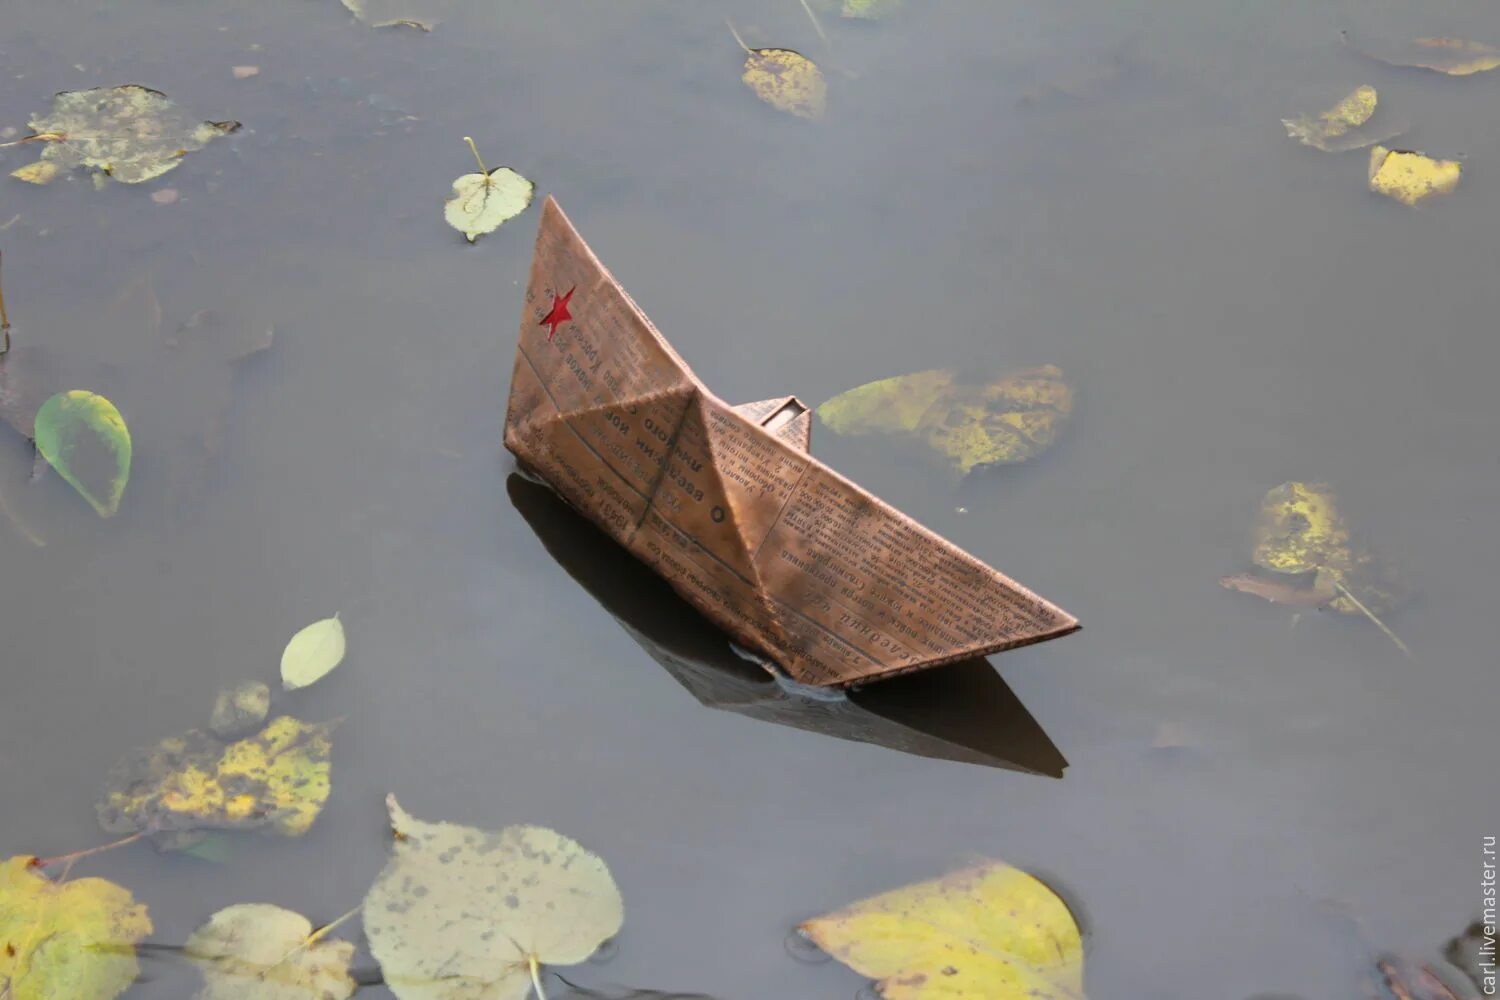 Кораблик из бумаги я по ручью. Бумажный кораблик. Кораблик из листьев. Бумажный кораблик в ручье. Кораблик из листика.